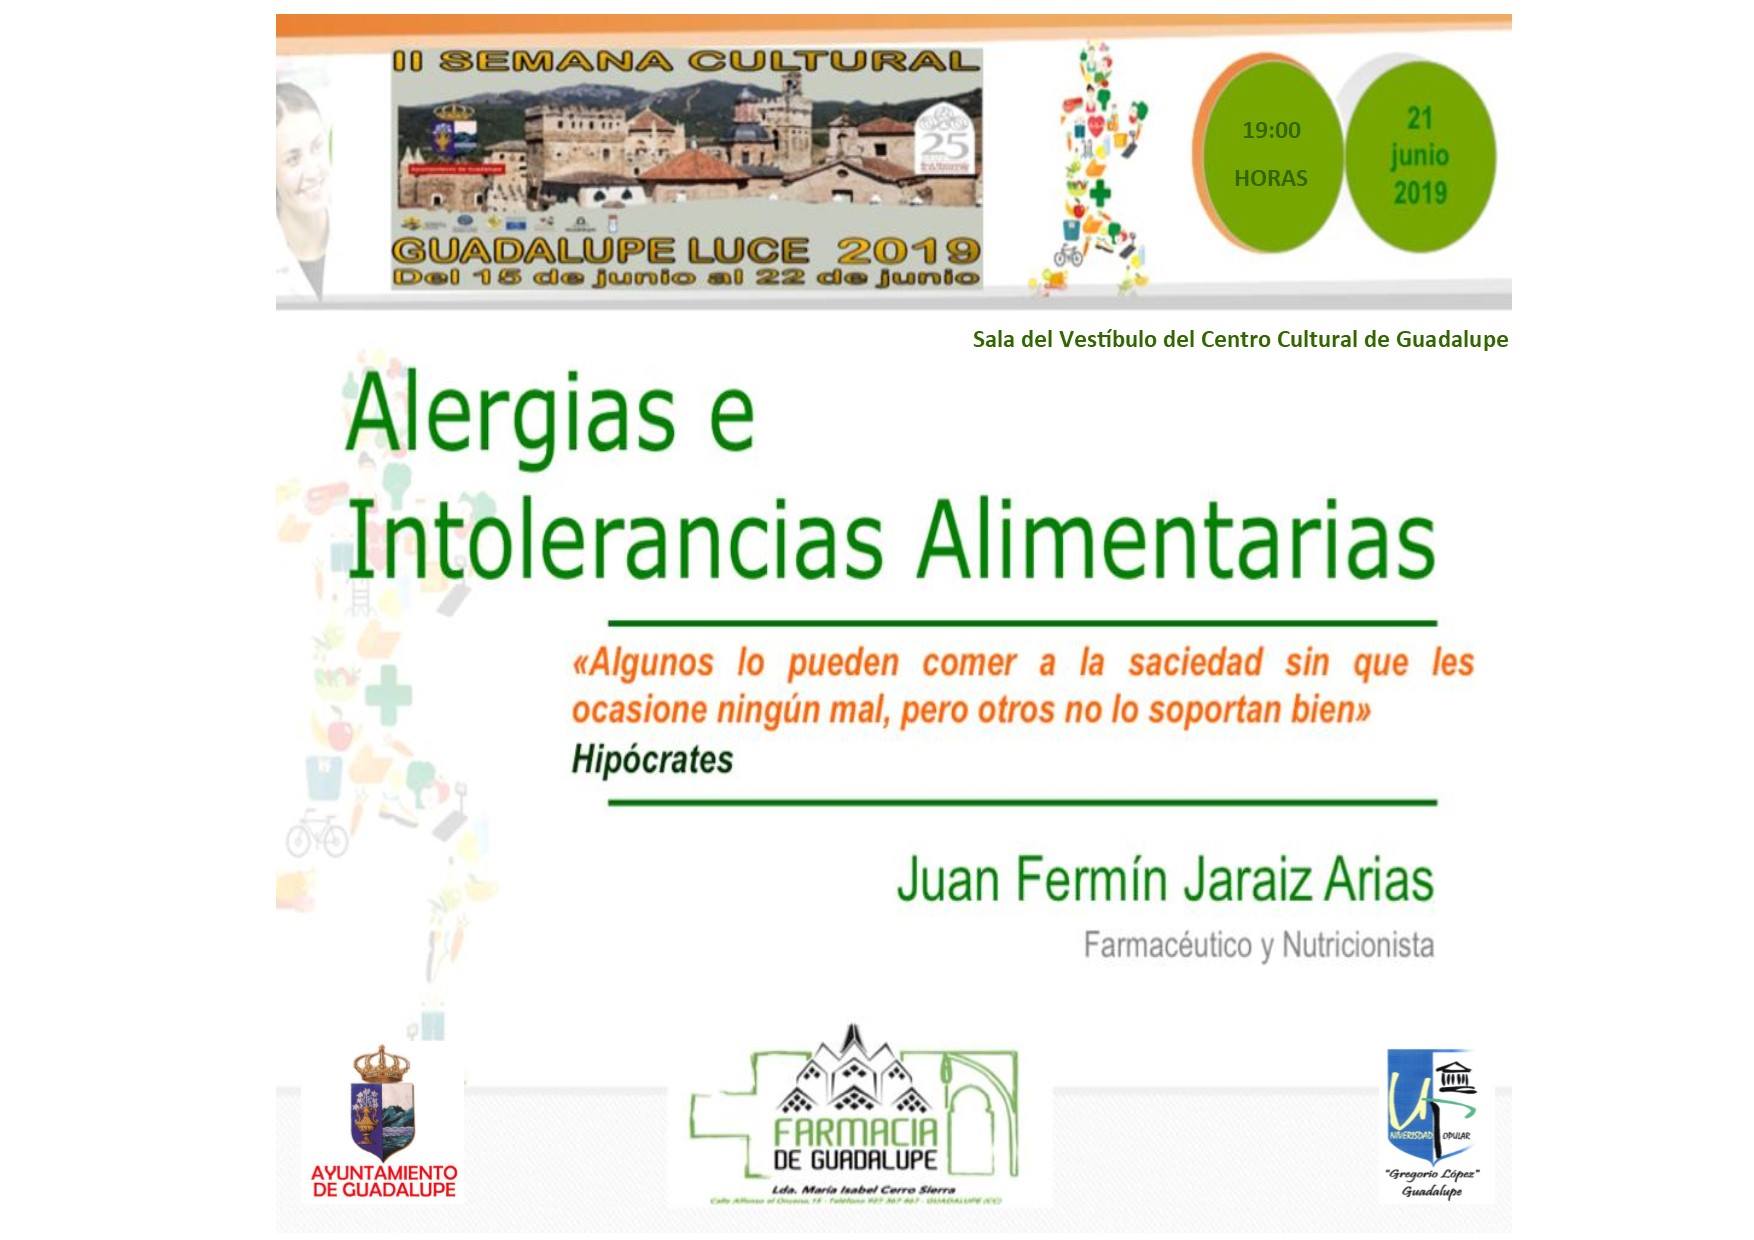 Charla-coloquio alergias e intolerancias alimentarias 2019 - Guadalupe (Cáceres)